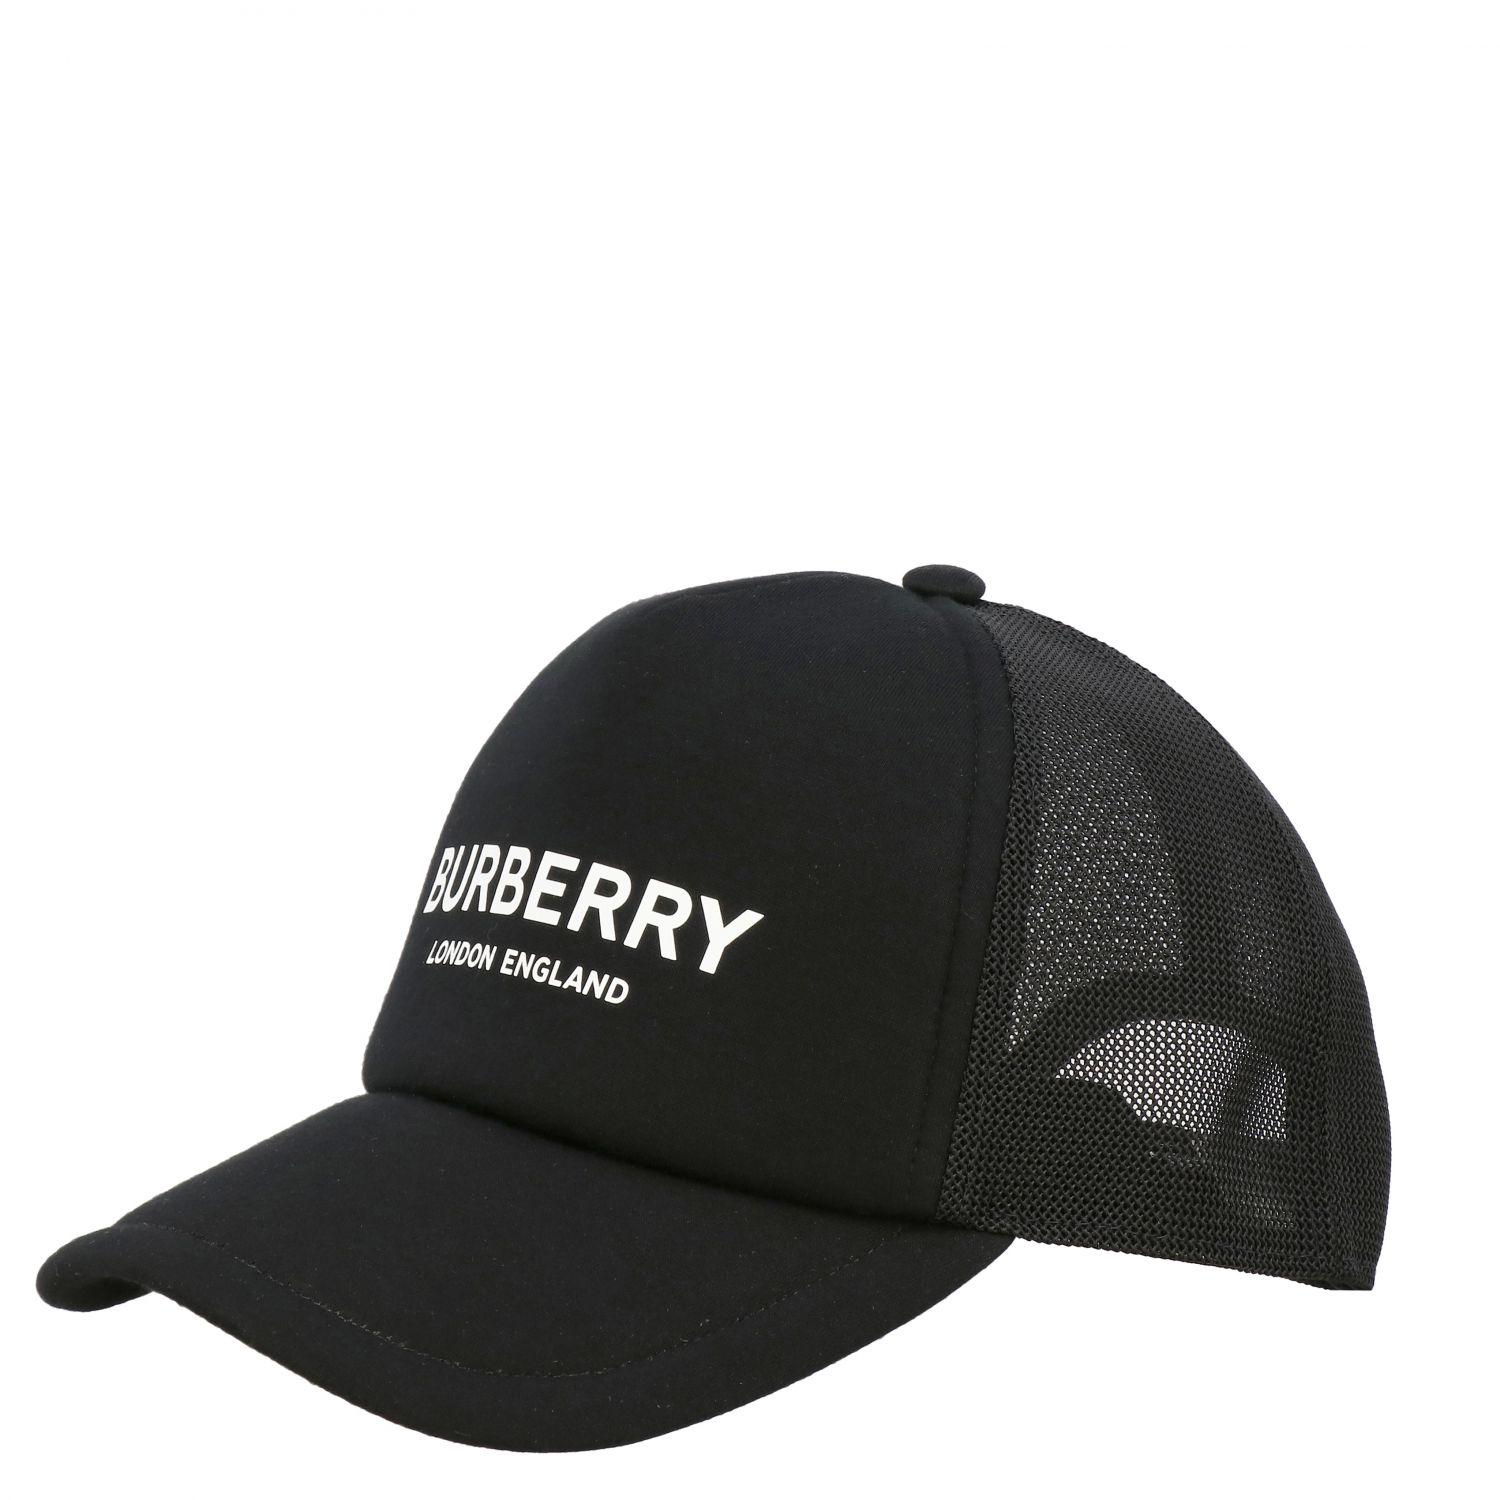 Introducir 73+ imagen burberry trucker hat - Abzlocal.mx